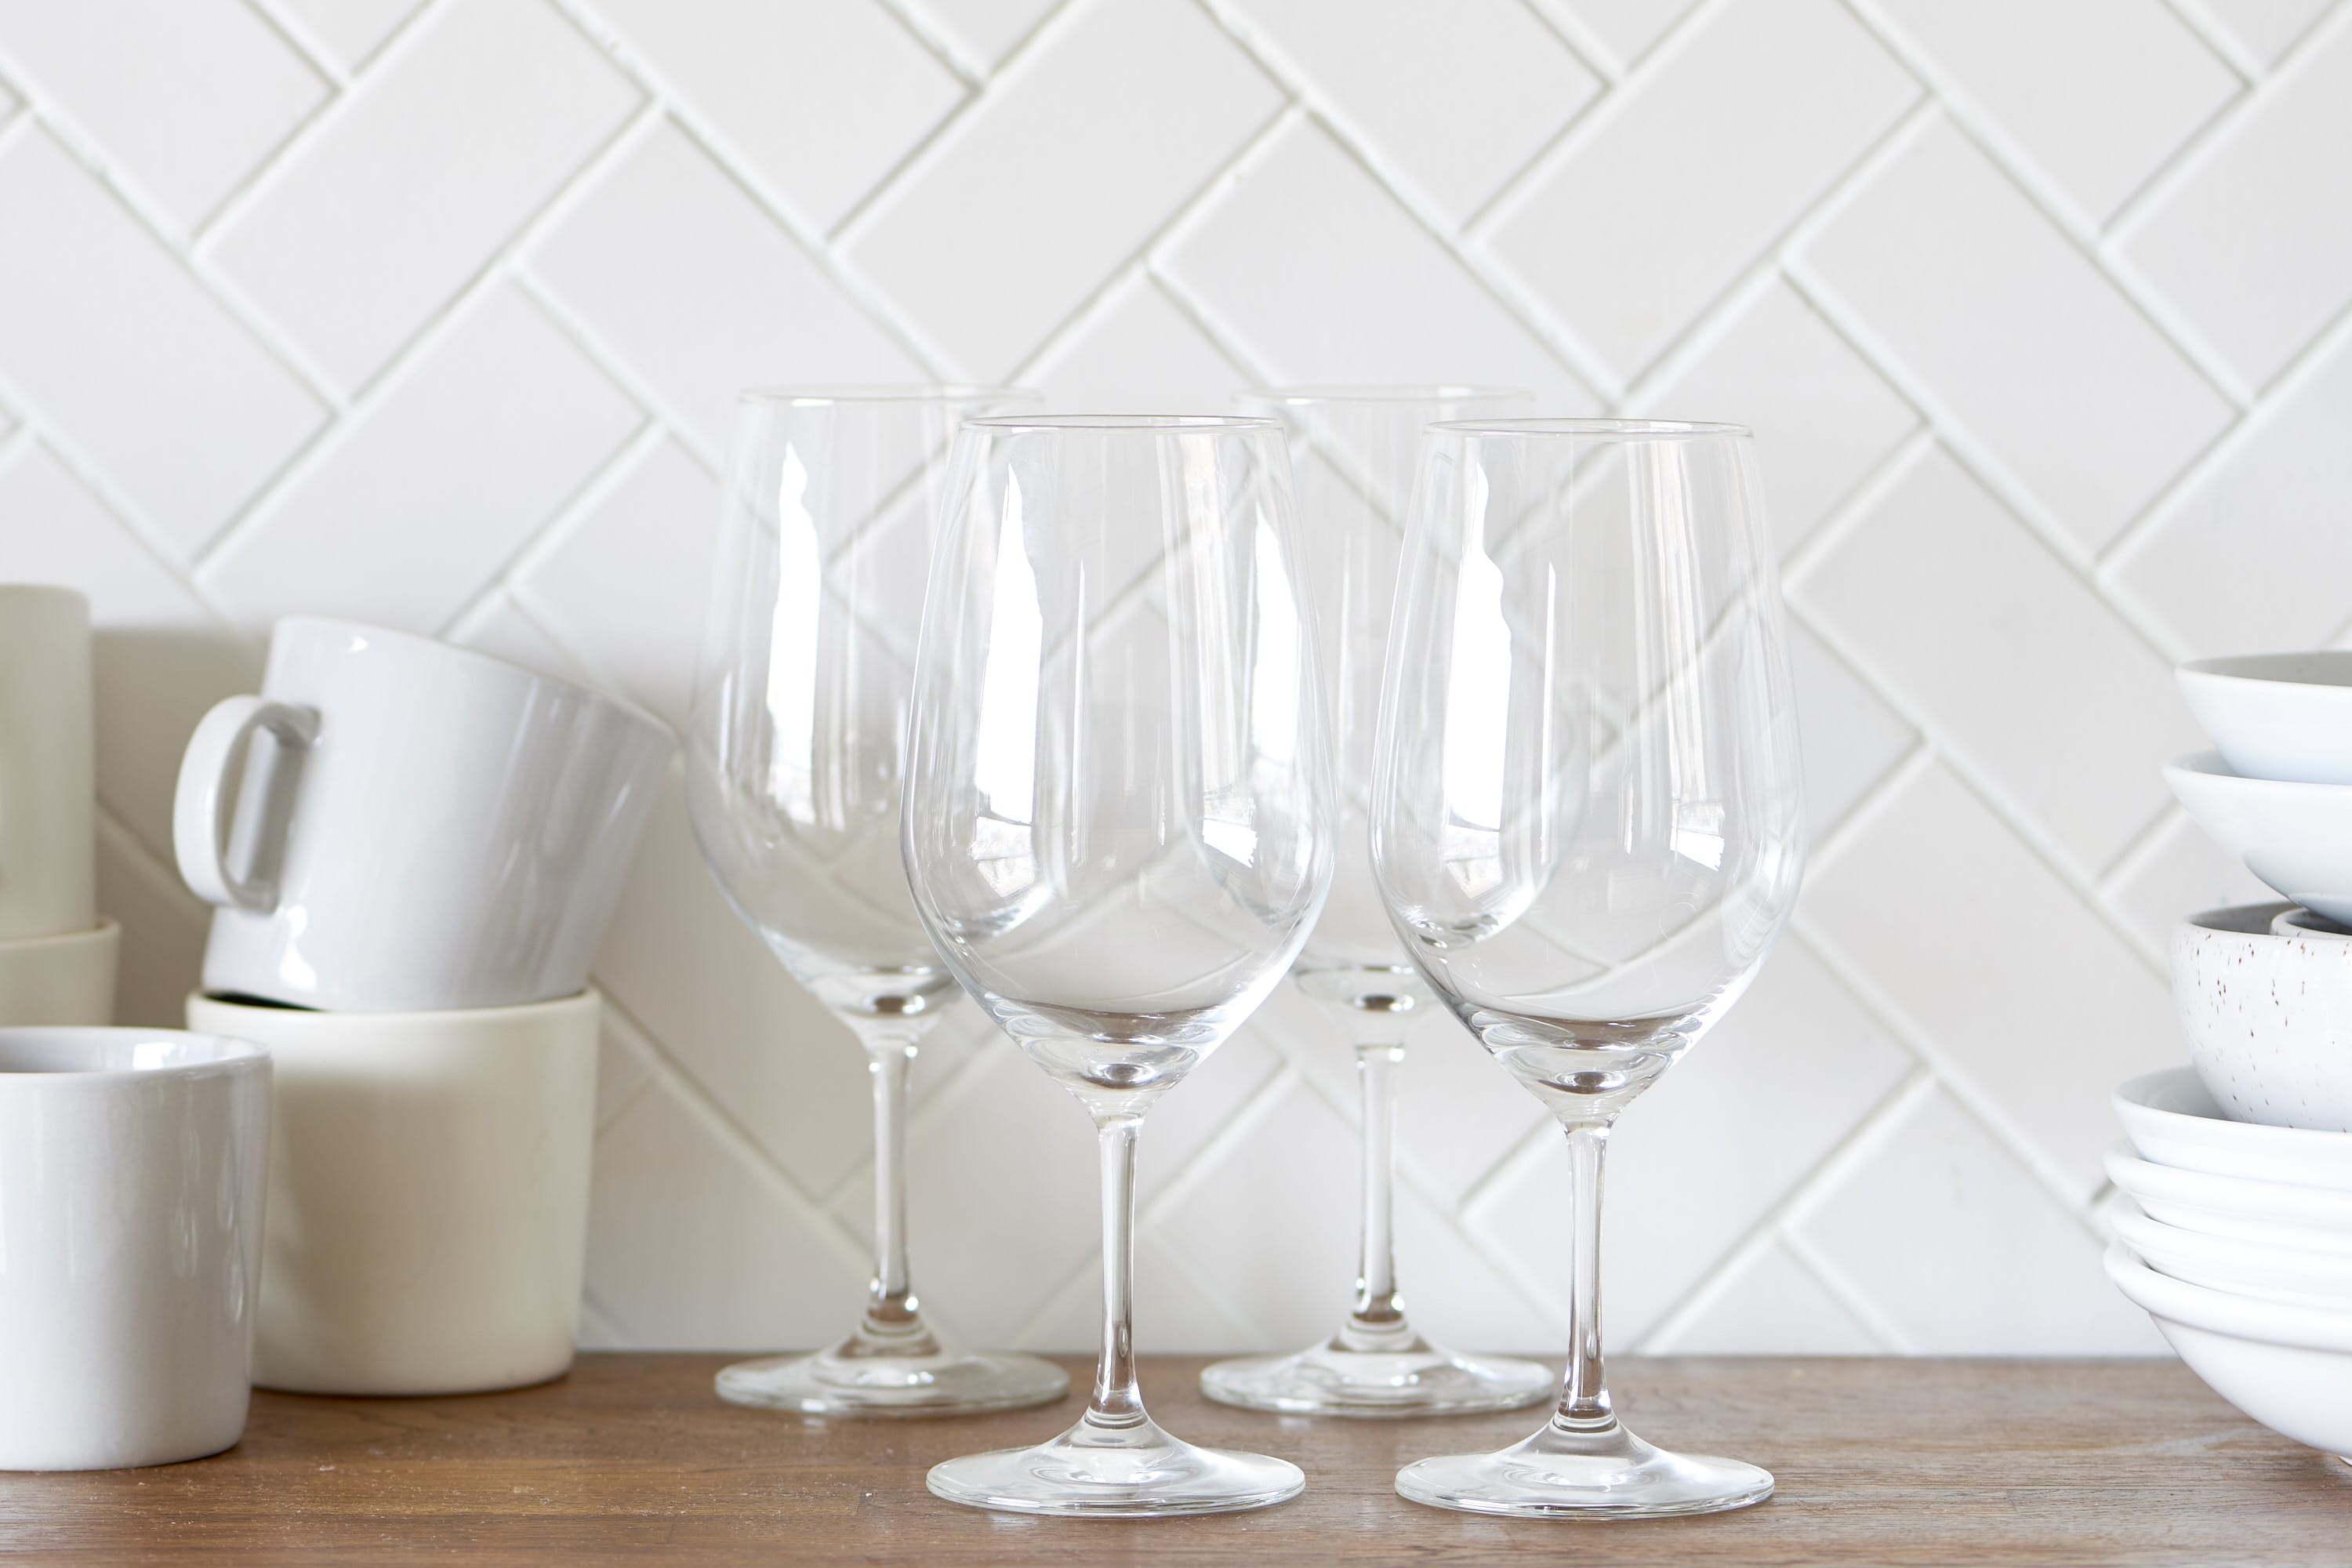 Dishwasher: Safely clean wine glasses